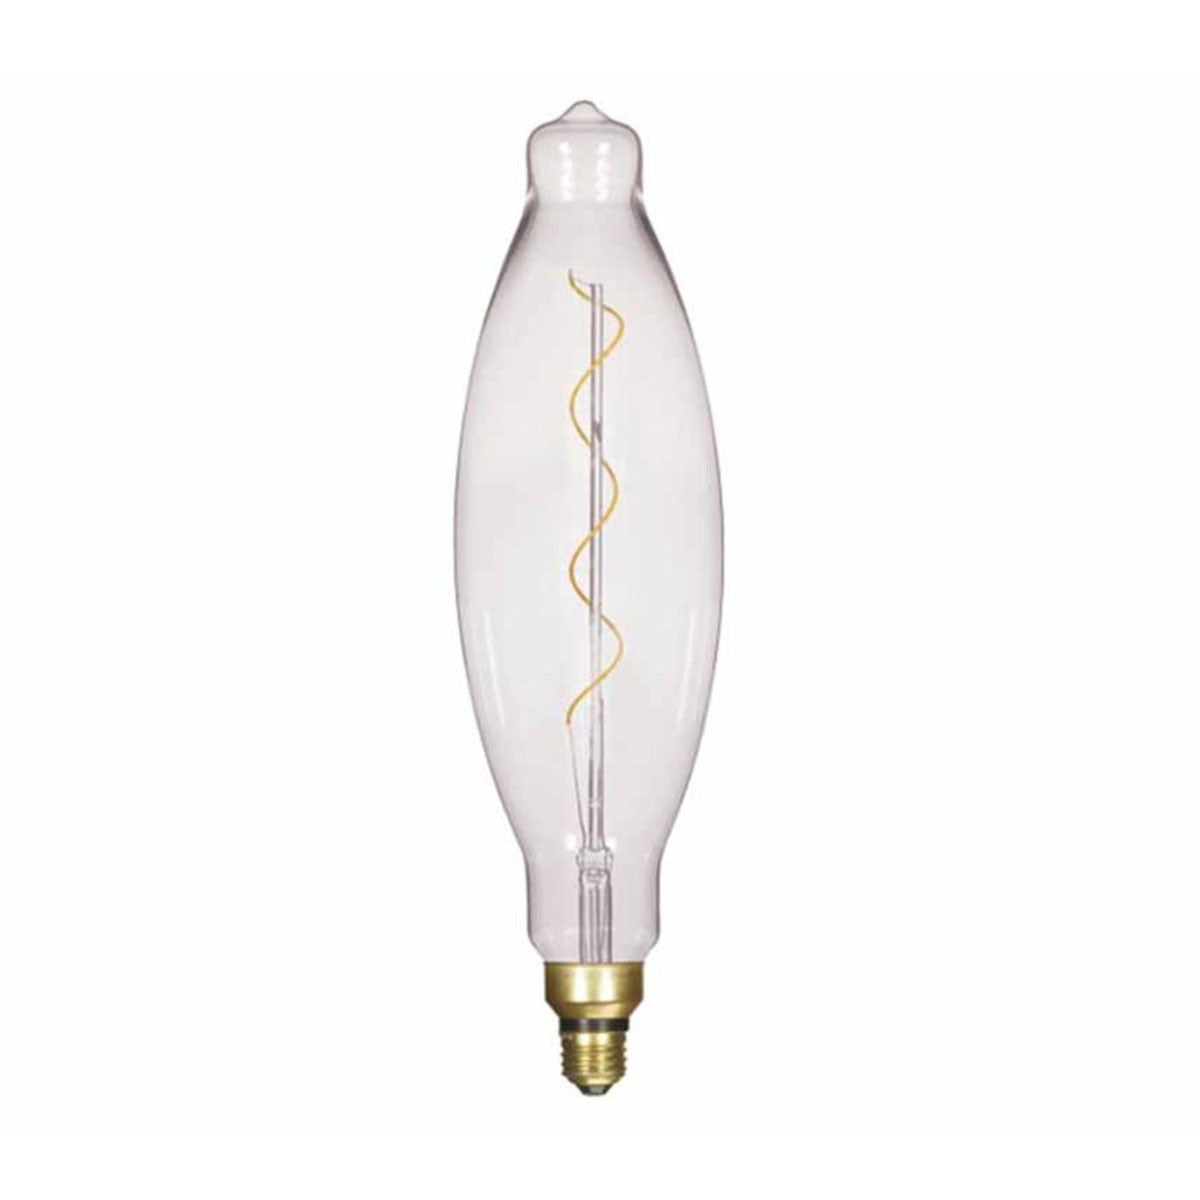 BT38 Bulged Tube Filament LED Bulb, 4 Watt, 200 Lumens, 2100K, E26 Medium Base, Clear Finish